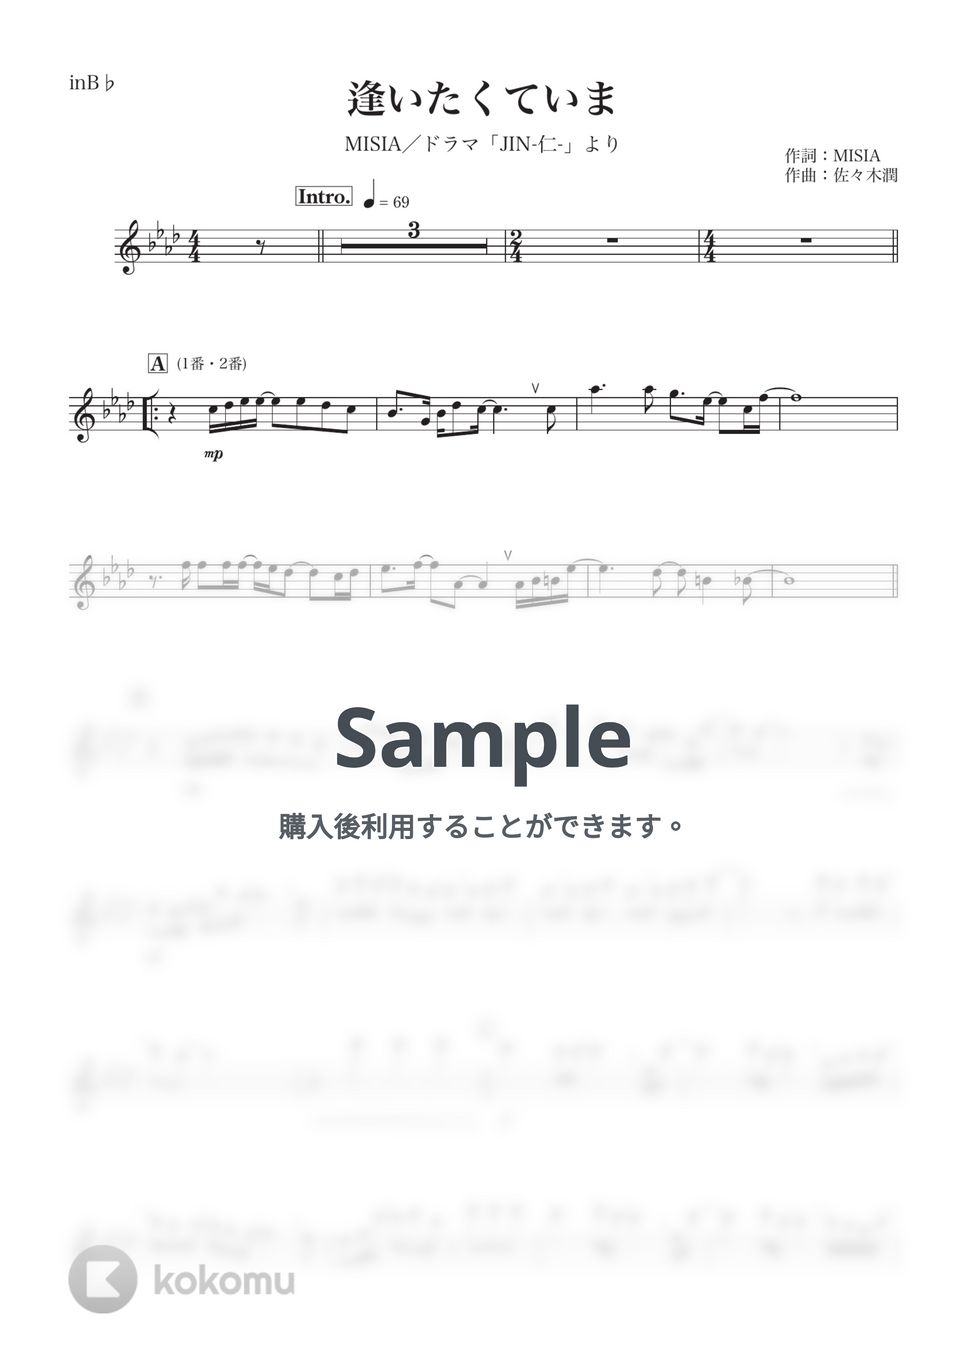 MISIA - 逢いたくていま (B♭) by kanamusic